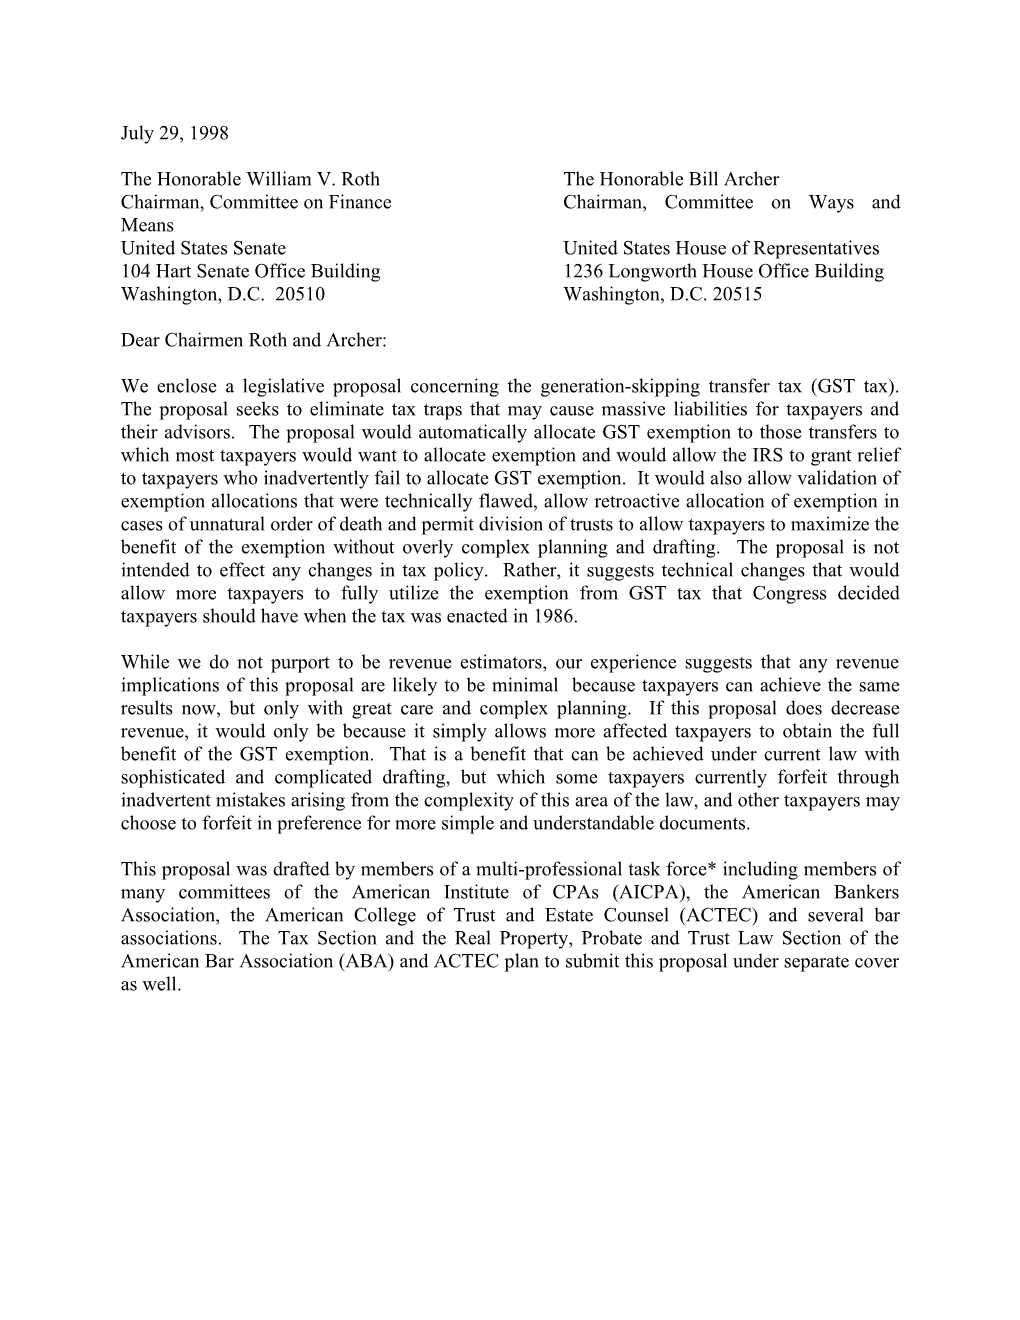 Multi-Organization Letter to Congress on GST Allocation Legislation - July 29, 1998